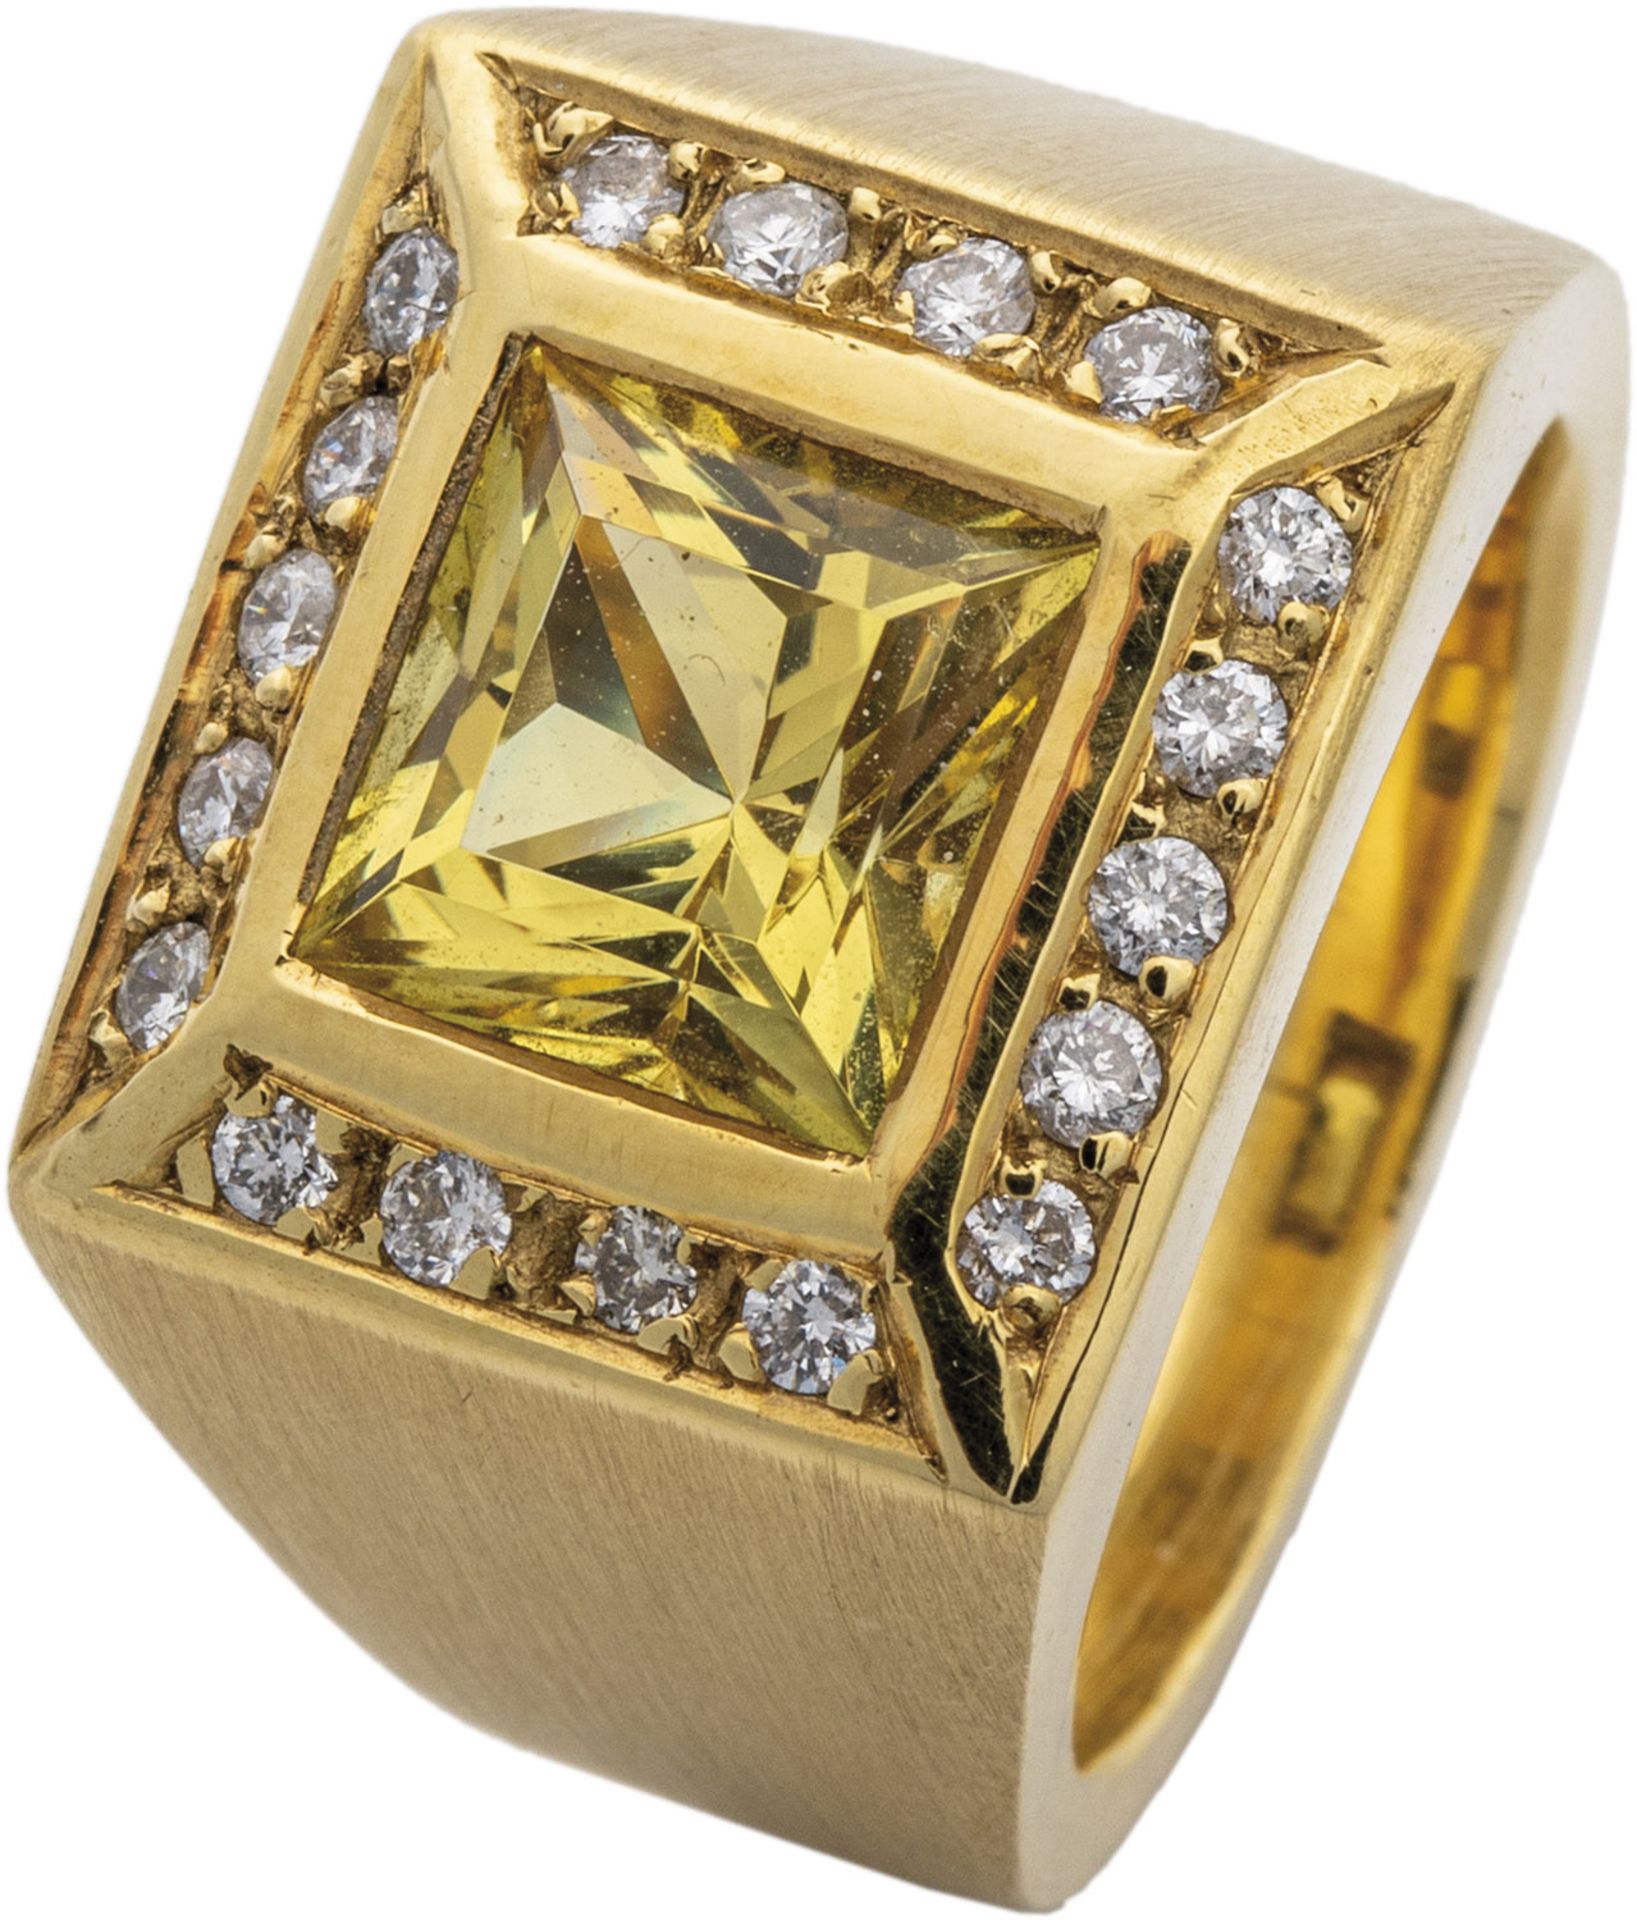 Gold beryl ring with brilliant-cut diamonds